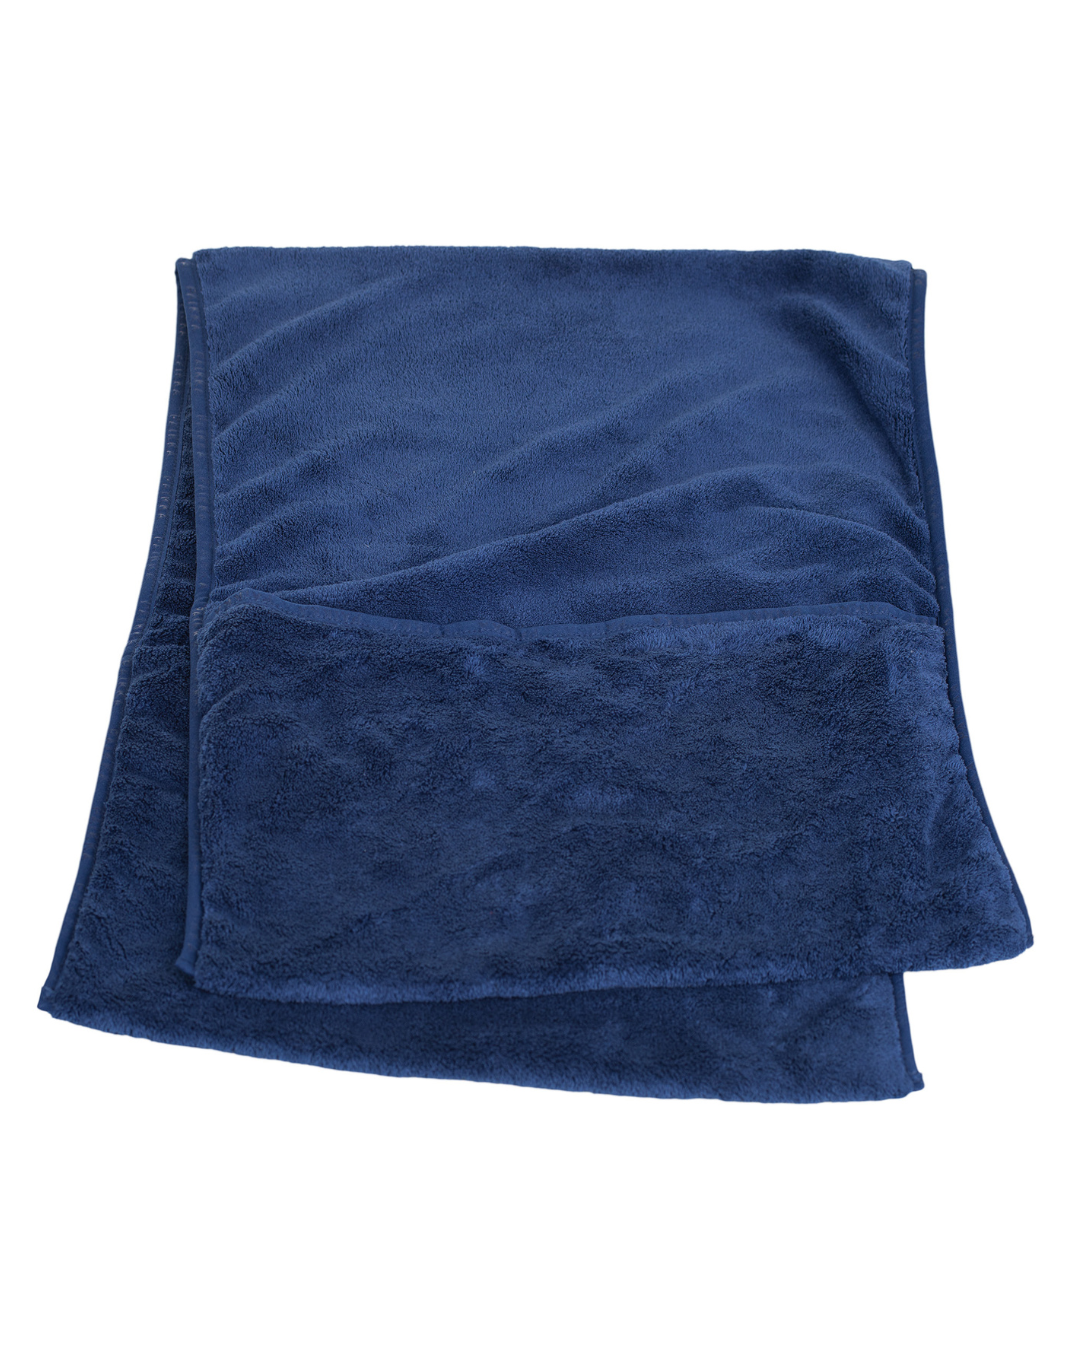 PAIKKA Drying Towel 40x110cm Navy